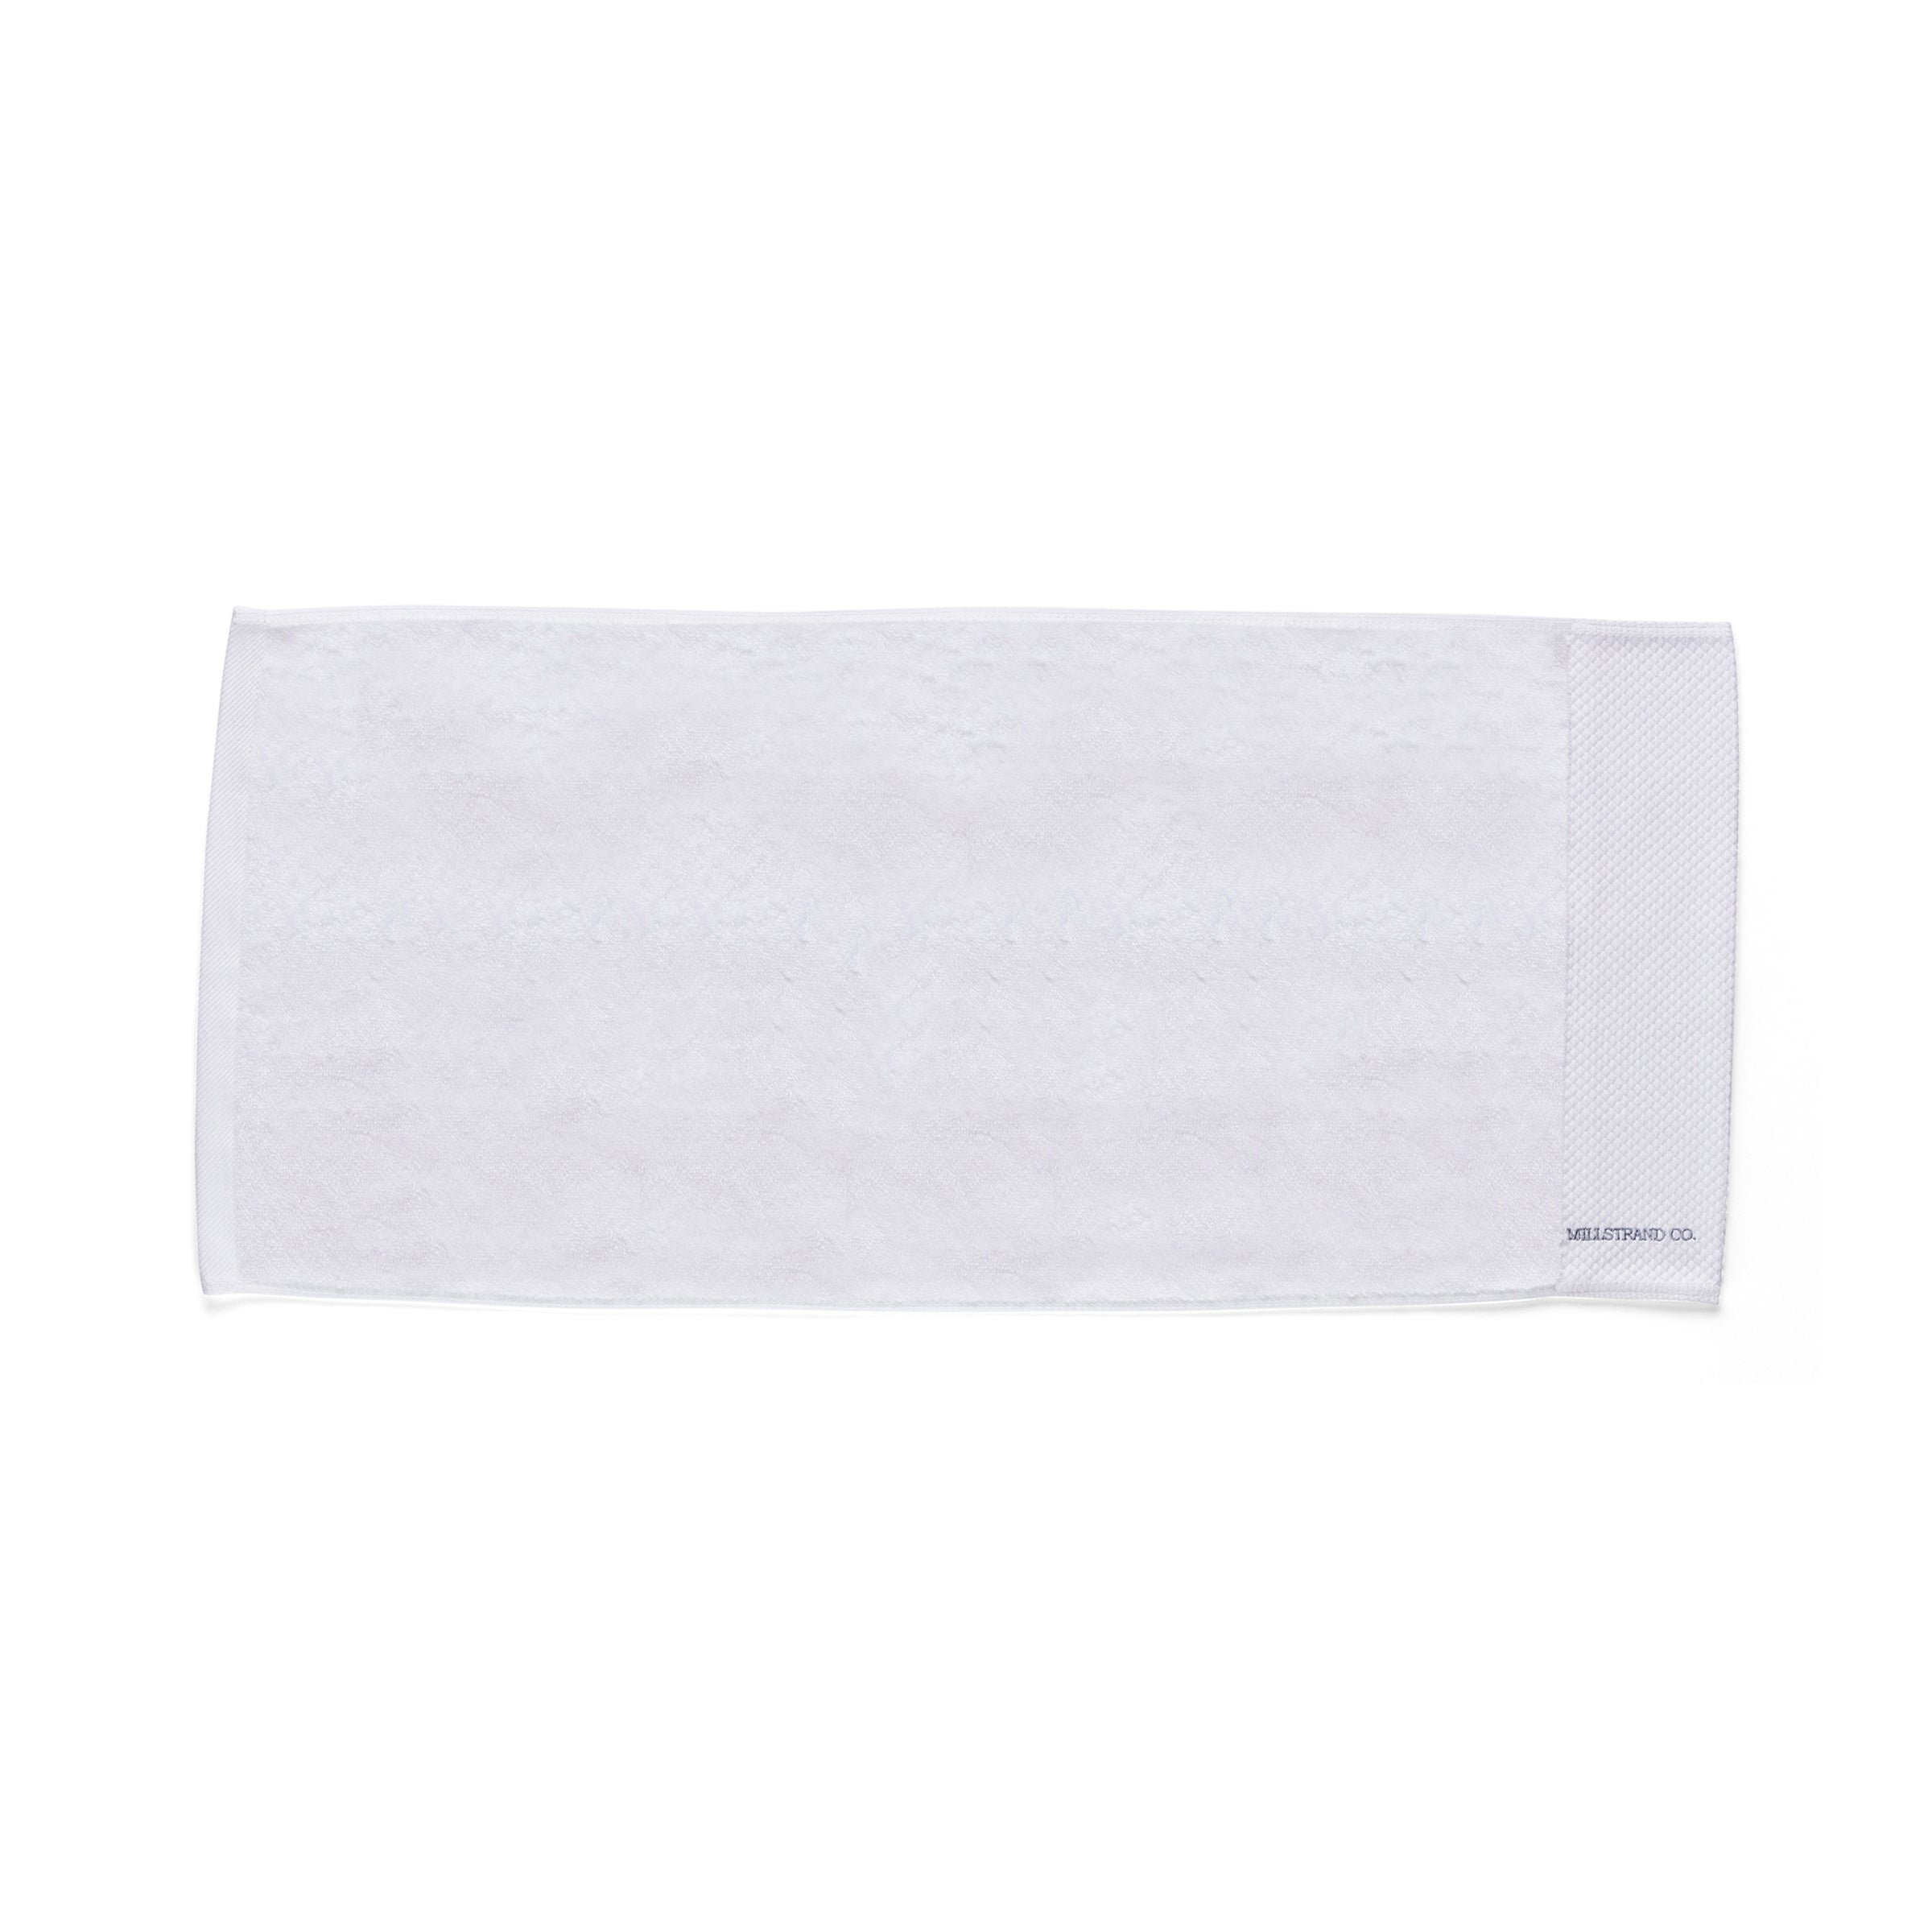 Millstrand Co. Lana Hand Towel Set in White Ivory